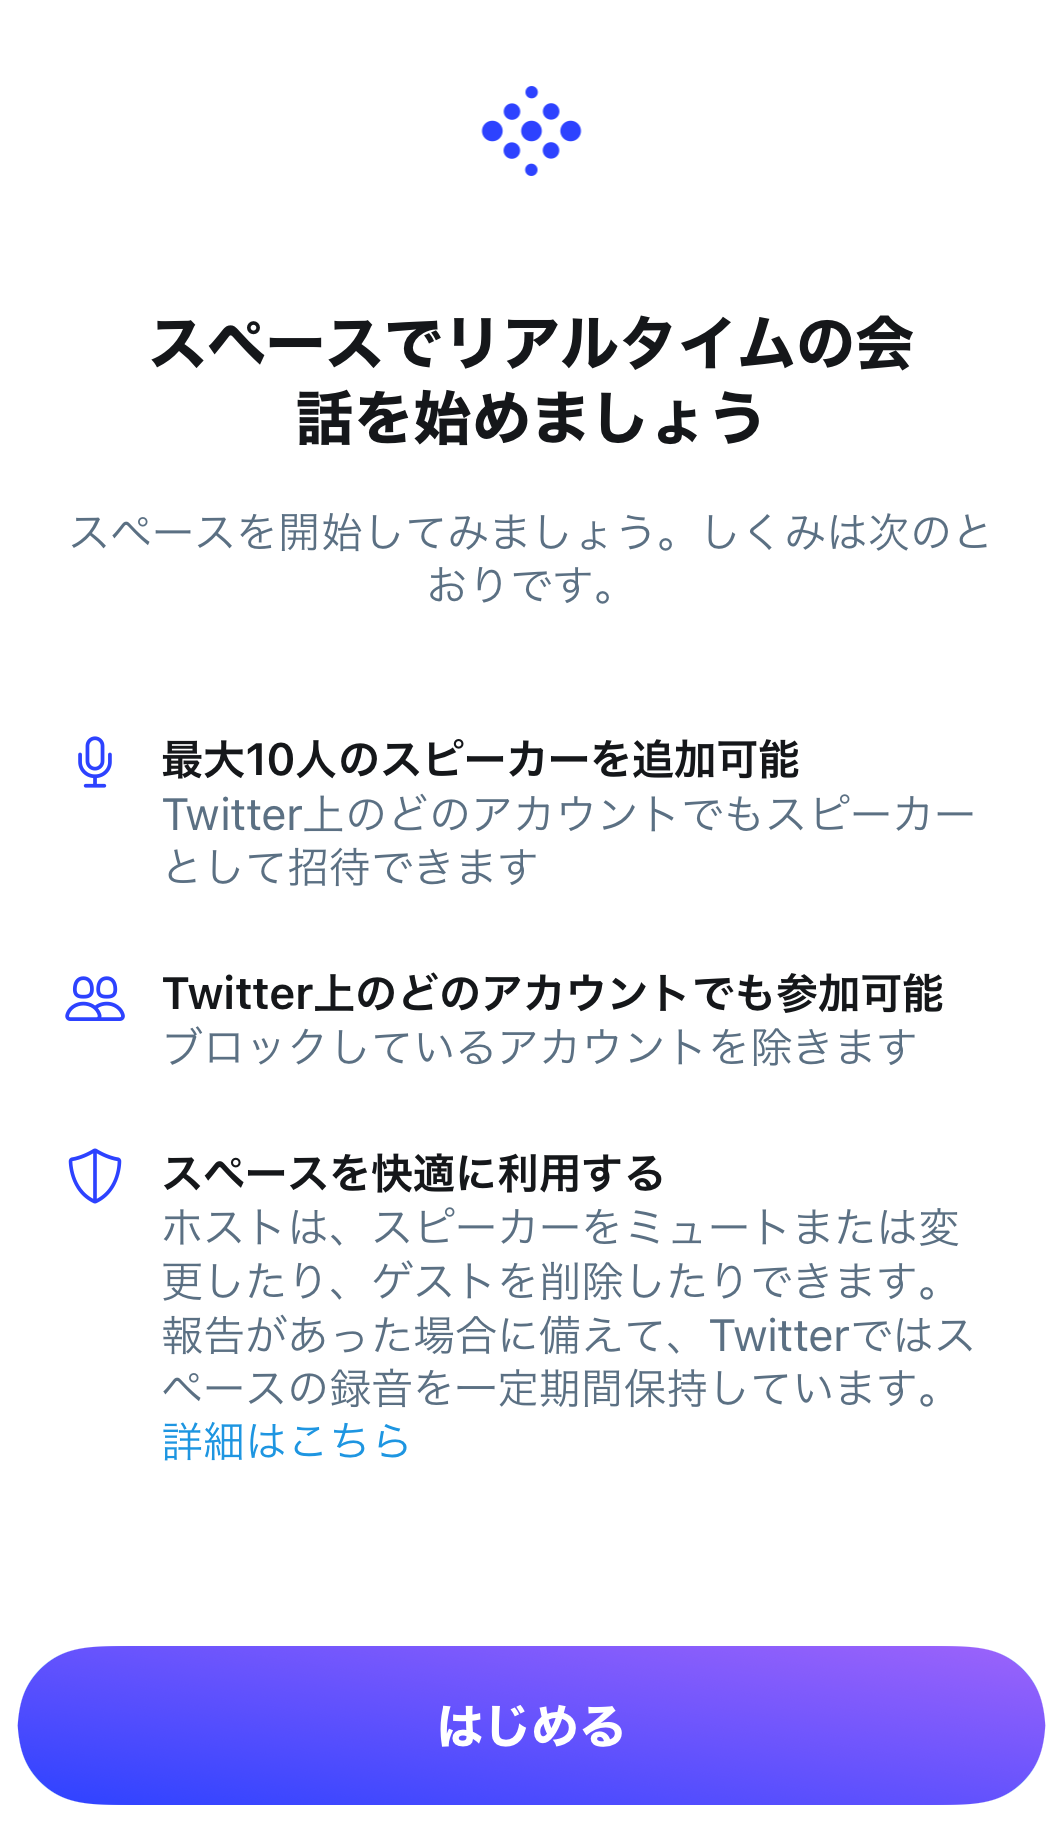 Twitterの音声チャット スペース フォロワー600人以上のユーザーが主催可能に Engadget 日本版